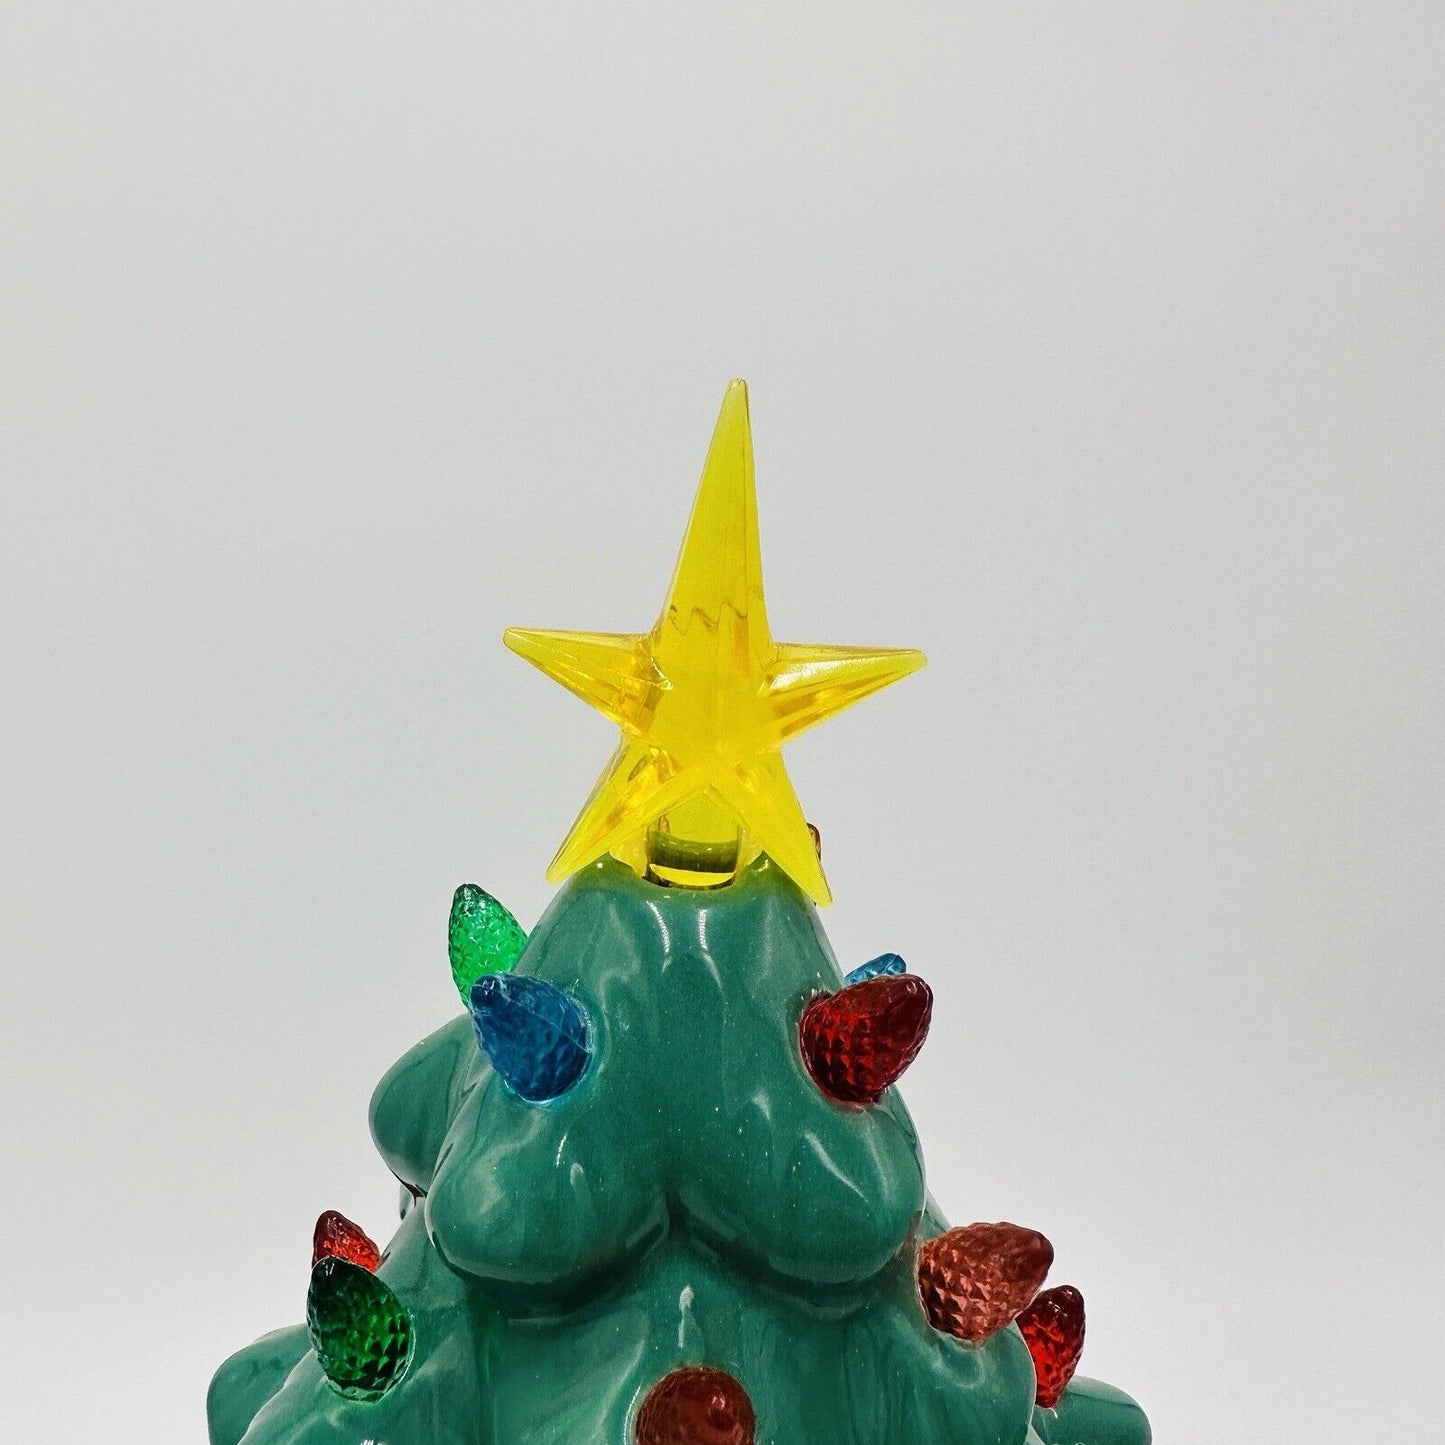 Mr Christmas Ceramic Tree 14” Lights Up Battery Operated Nostalgic Green